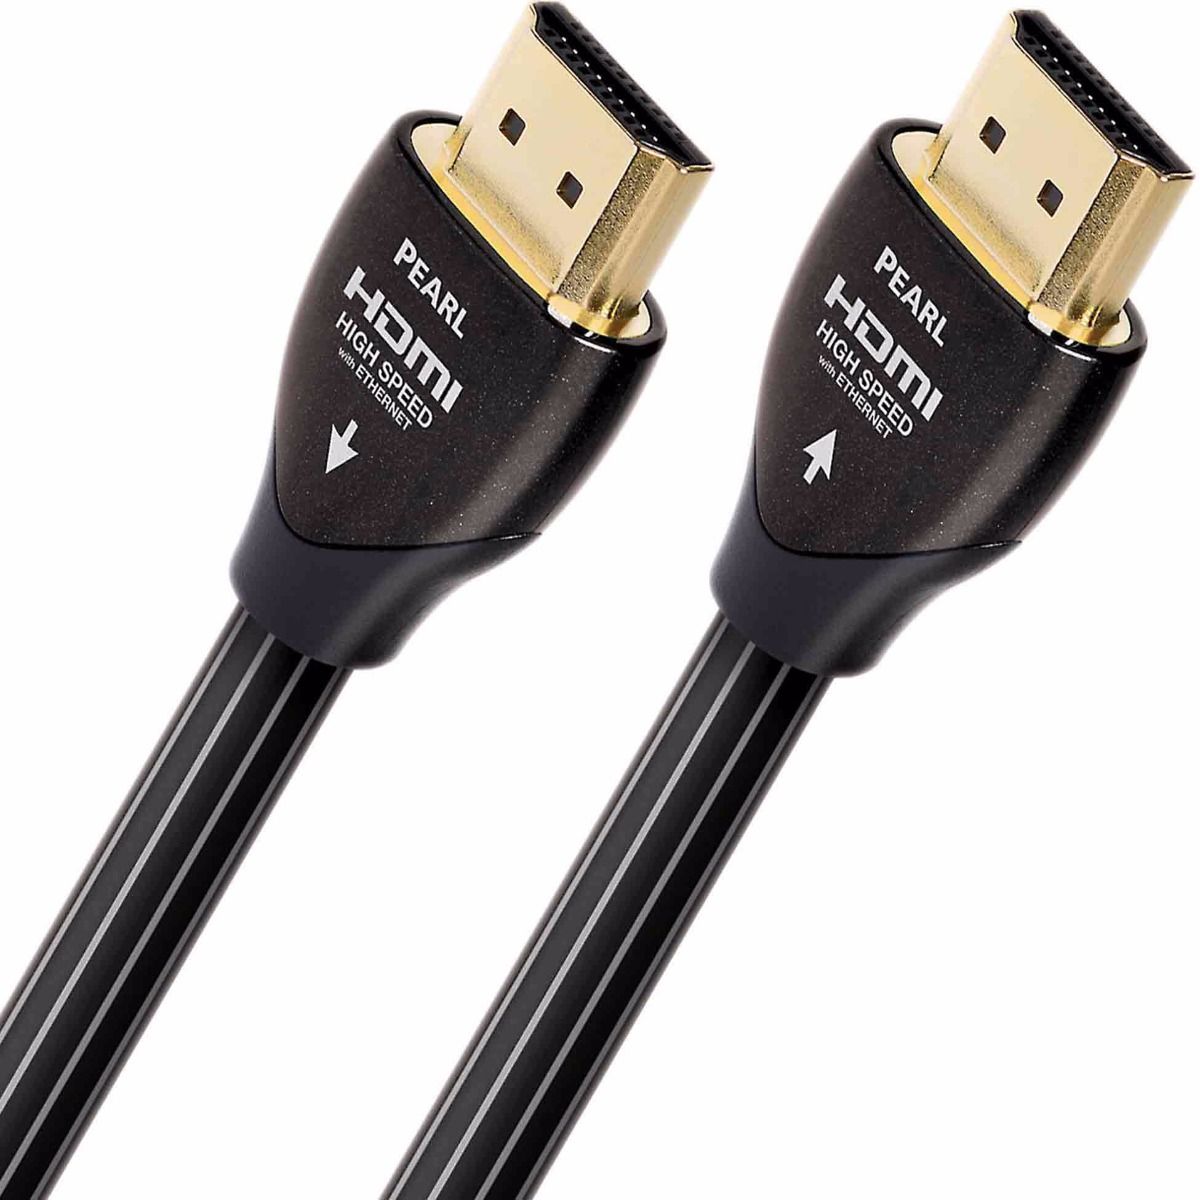 AudioQuest Pearl HDMI Cable